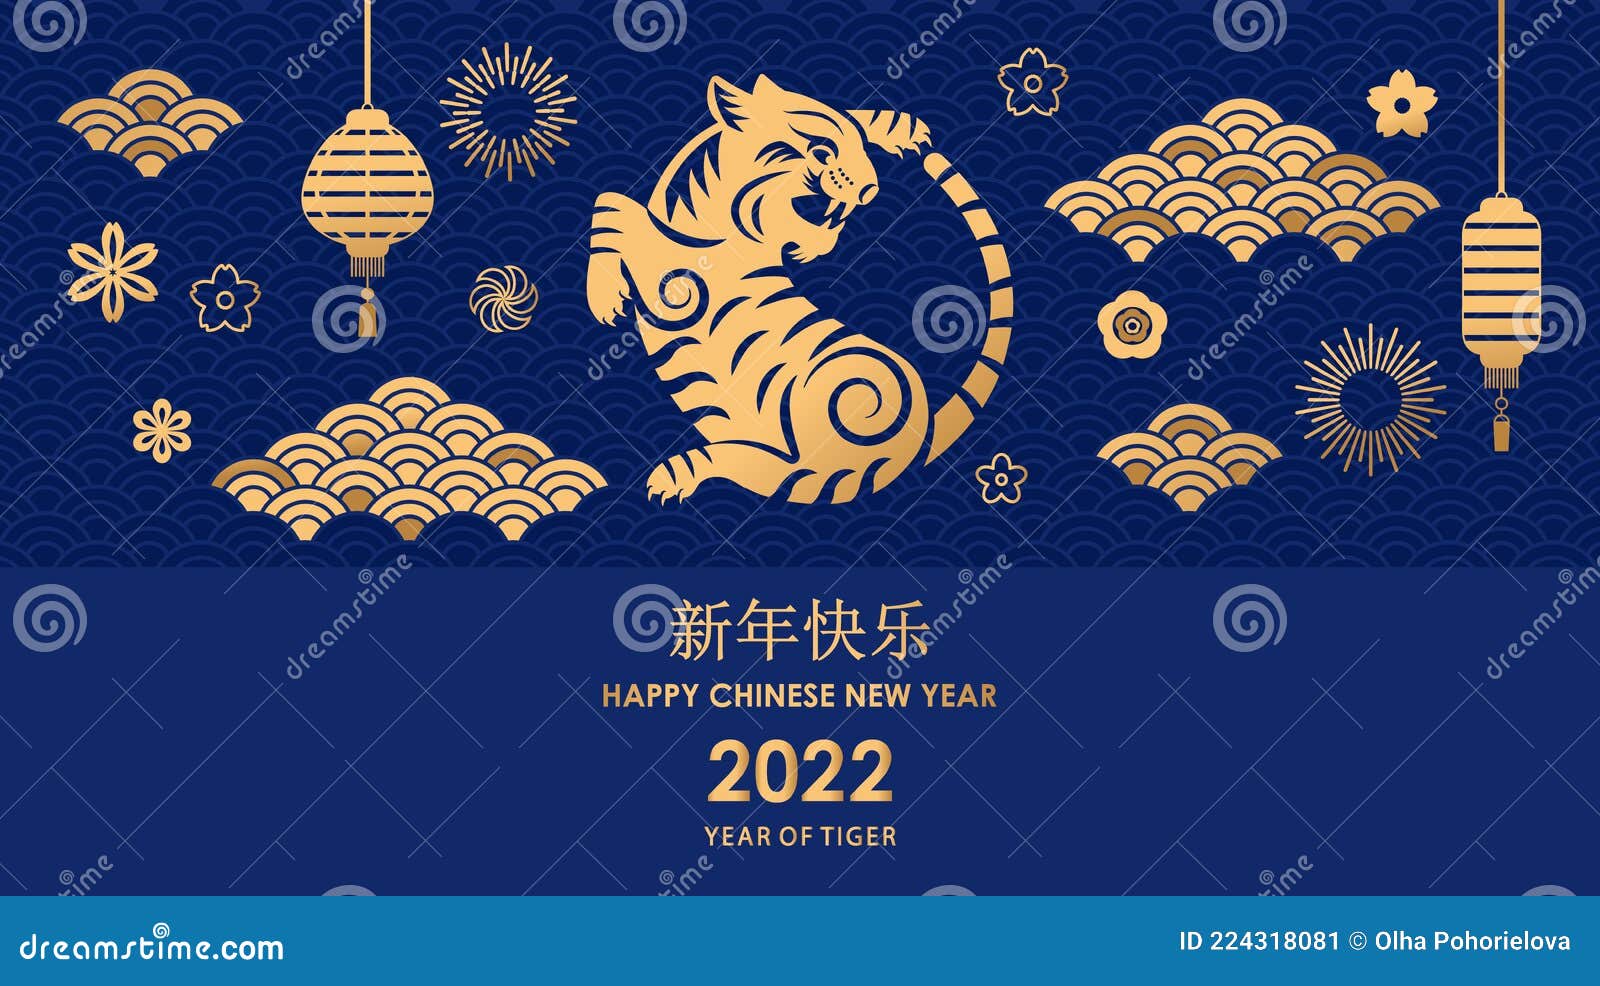 Lunar New Year 2022 Greeting Cards